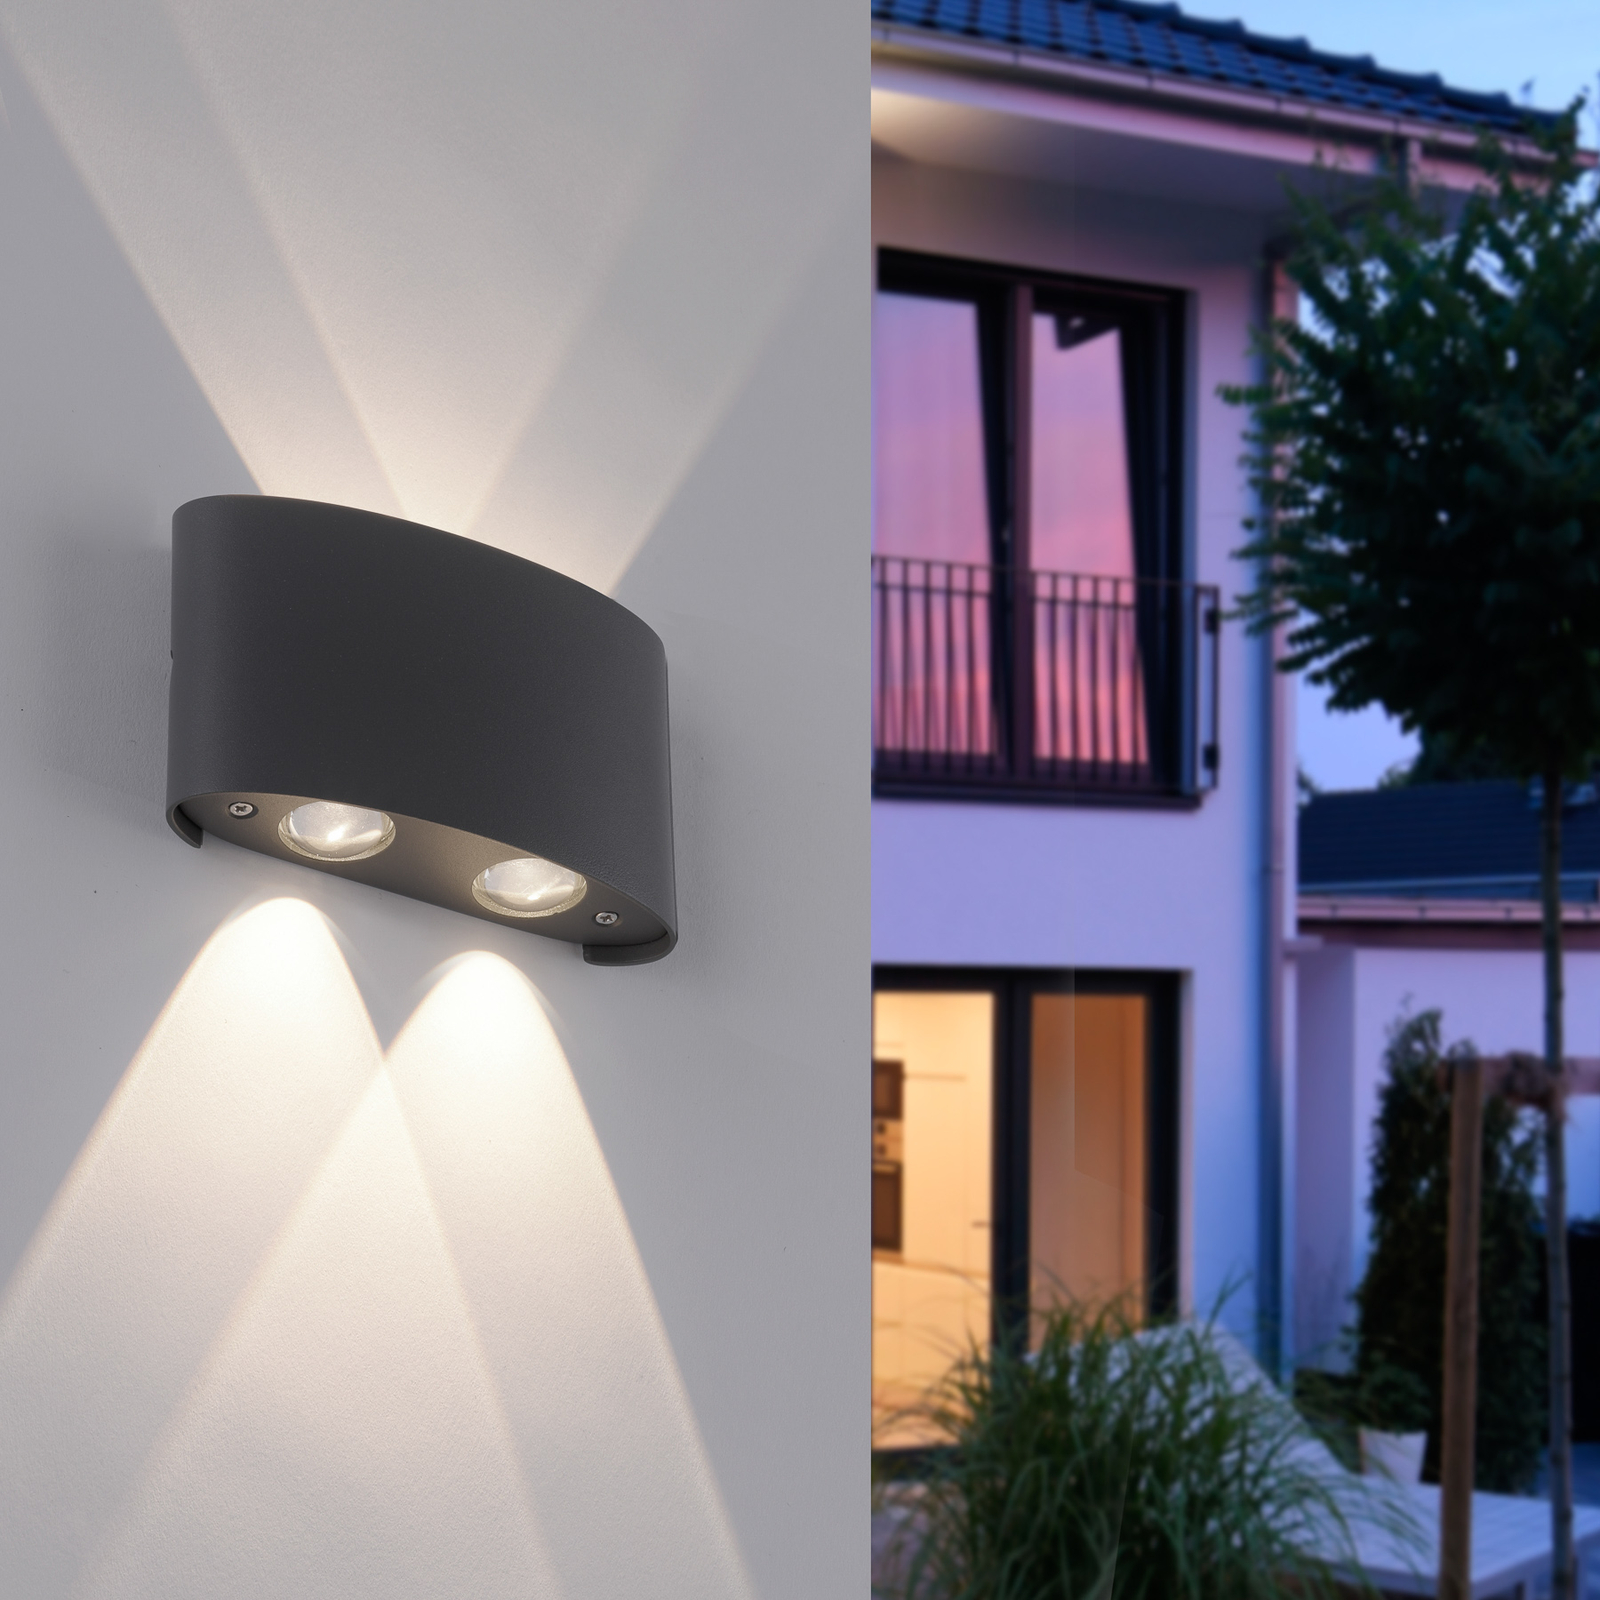 Carlo LED outdoor wall light, IP54, four-bulb